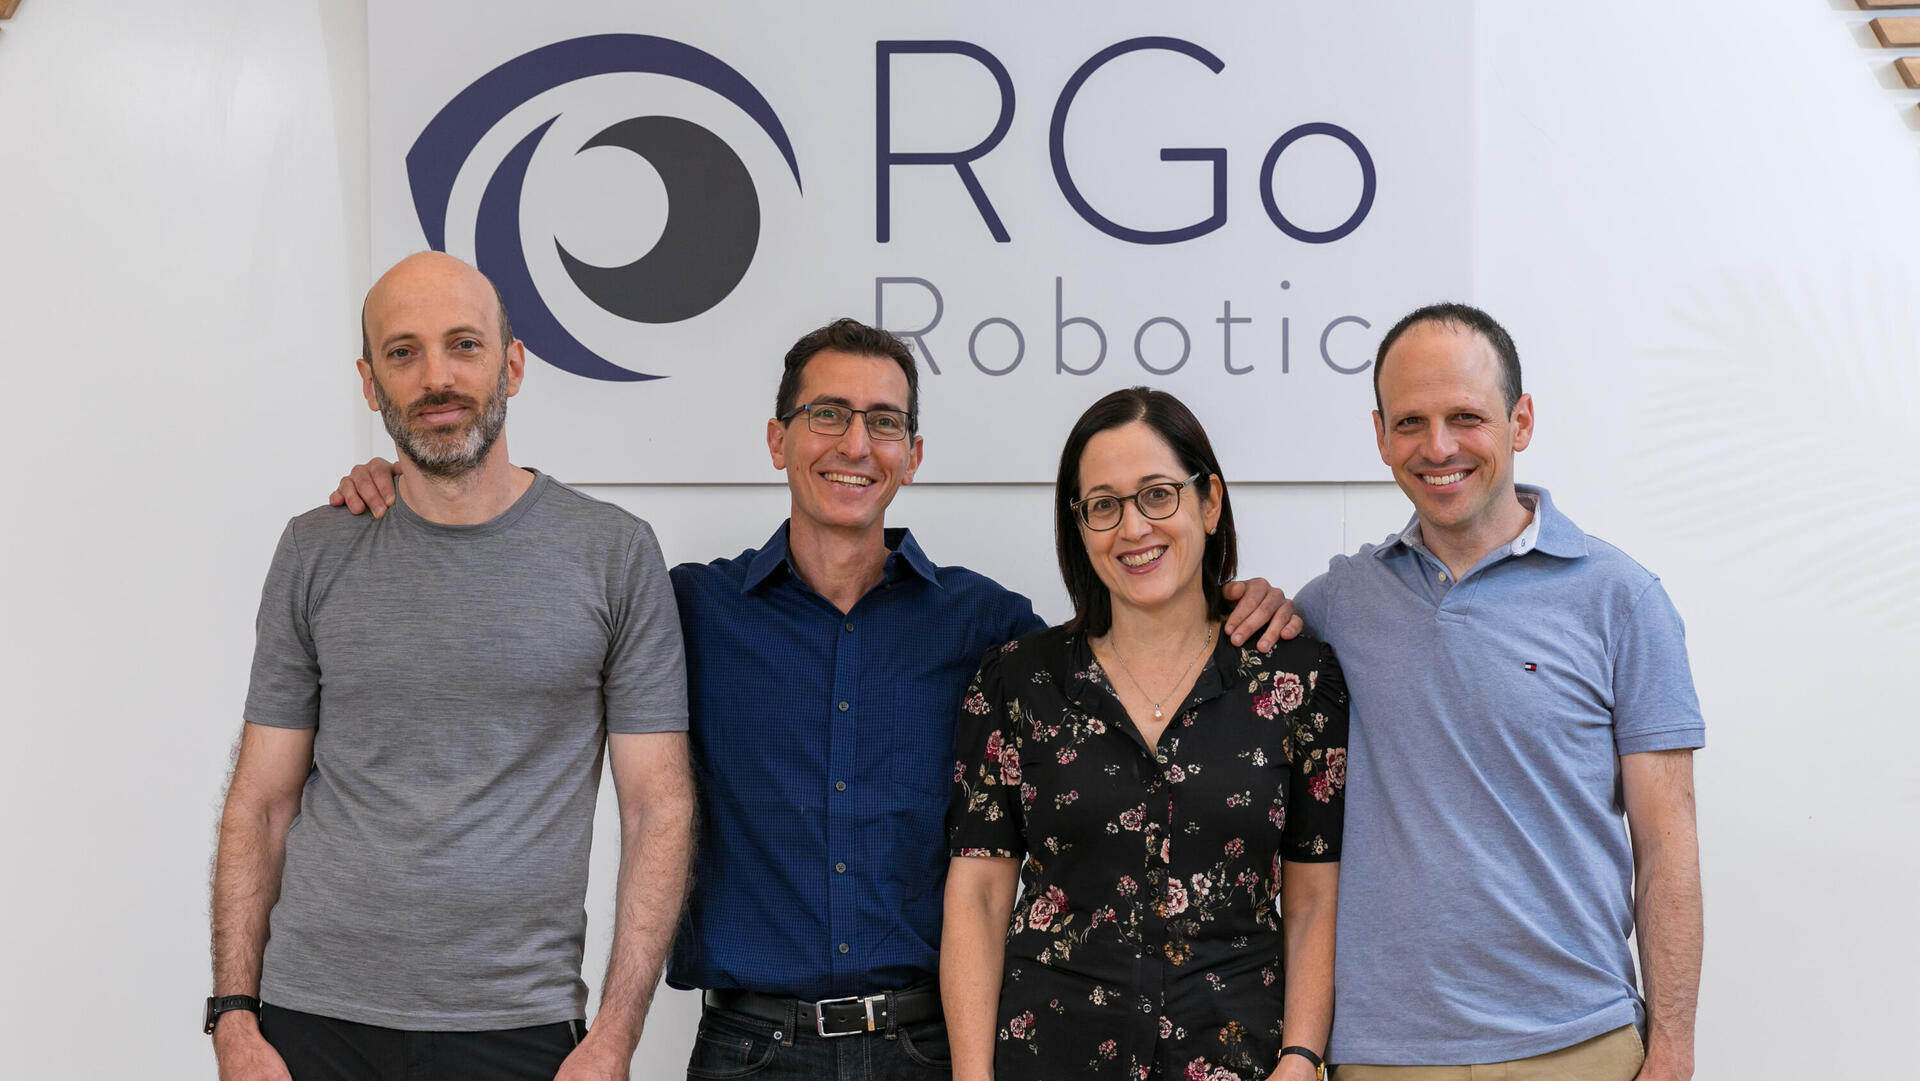 RGo Robotics founders